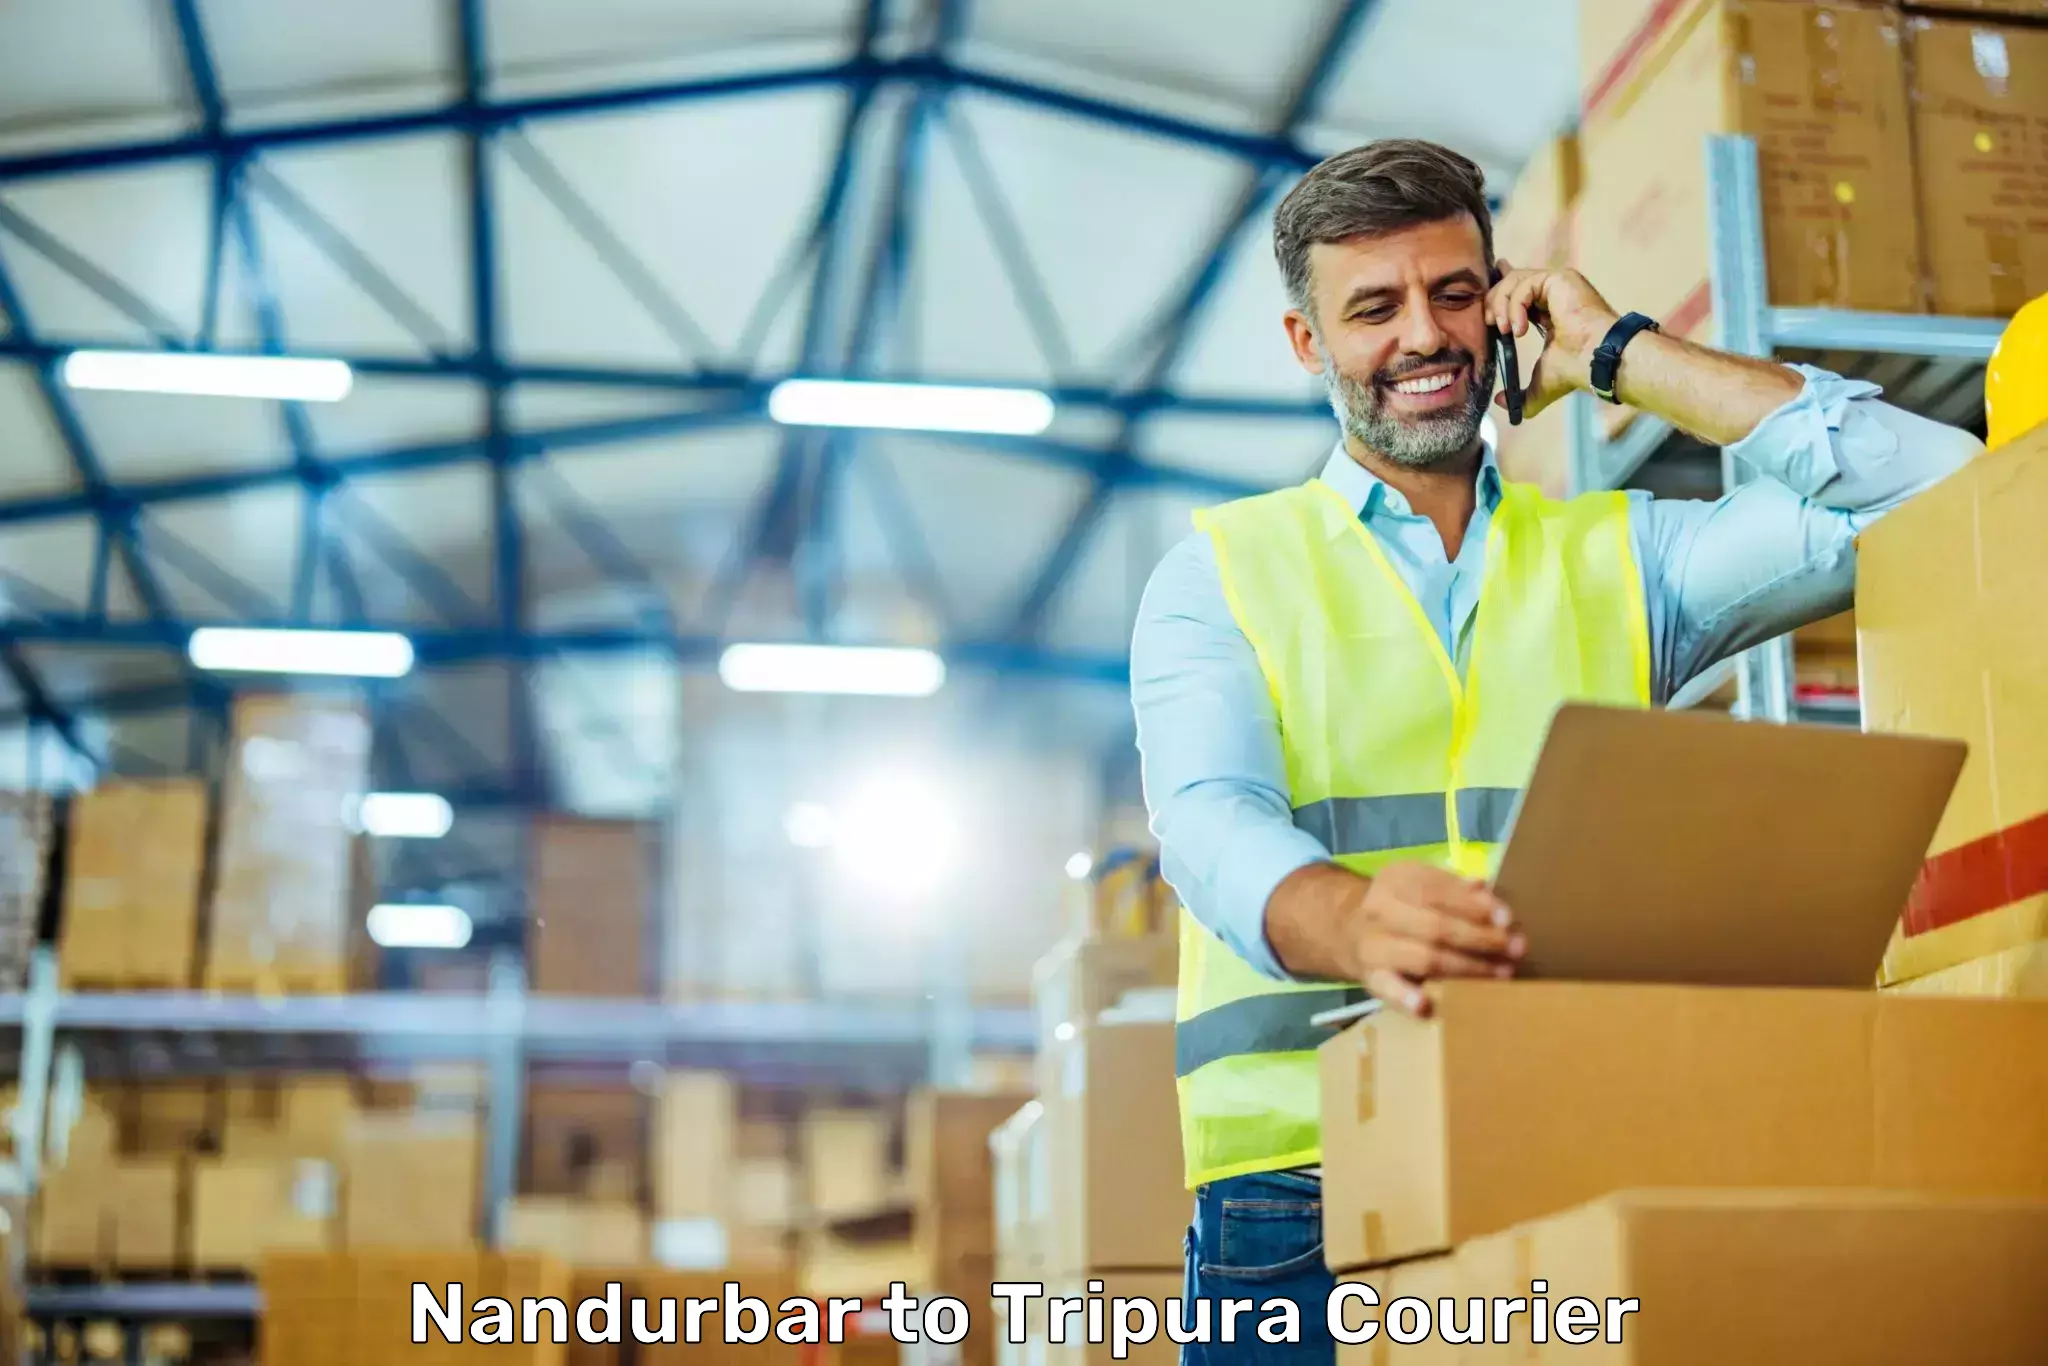 Global logistics network Nandurbar to Tripura